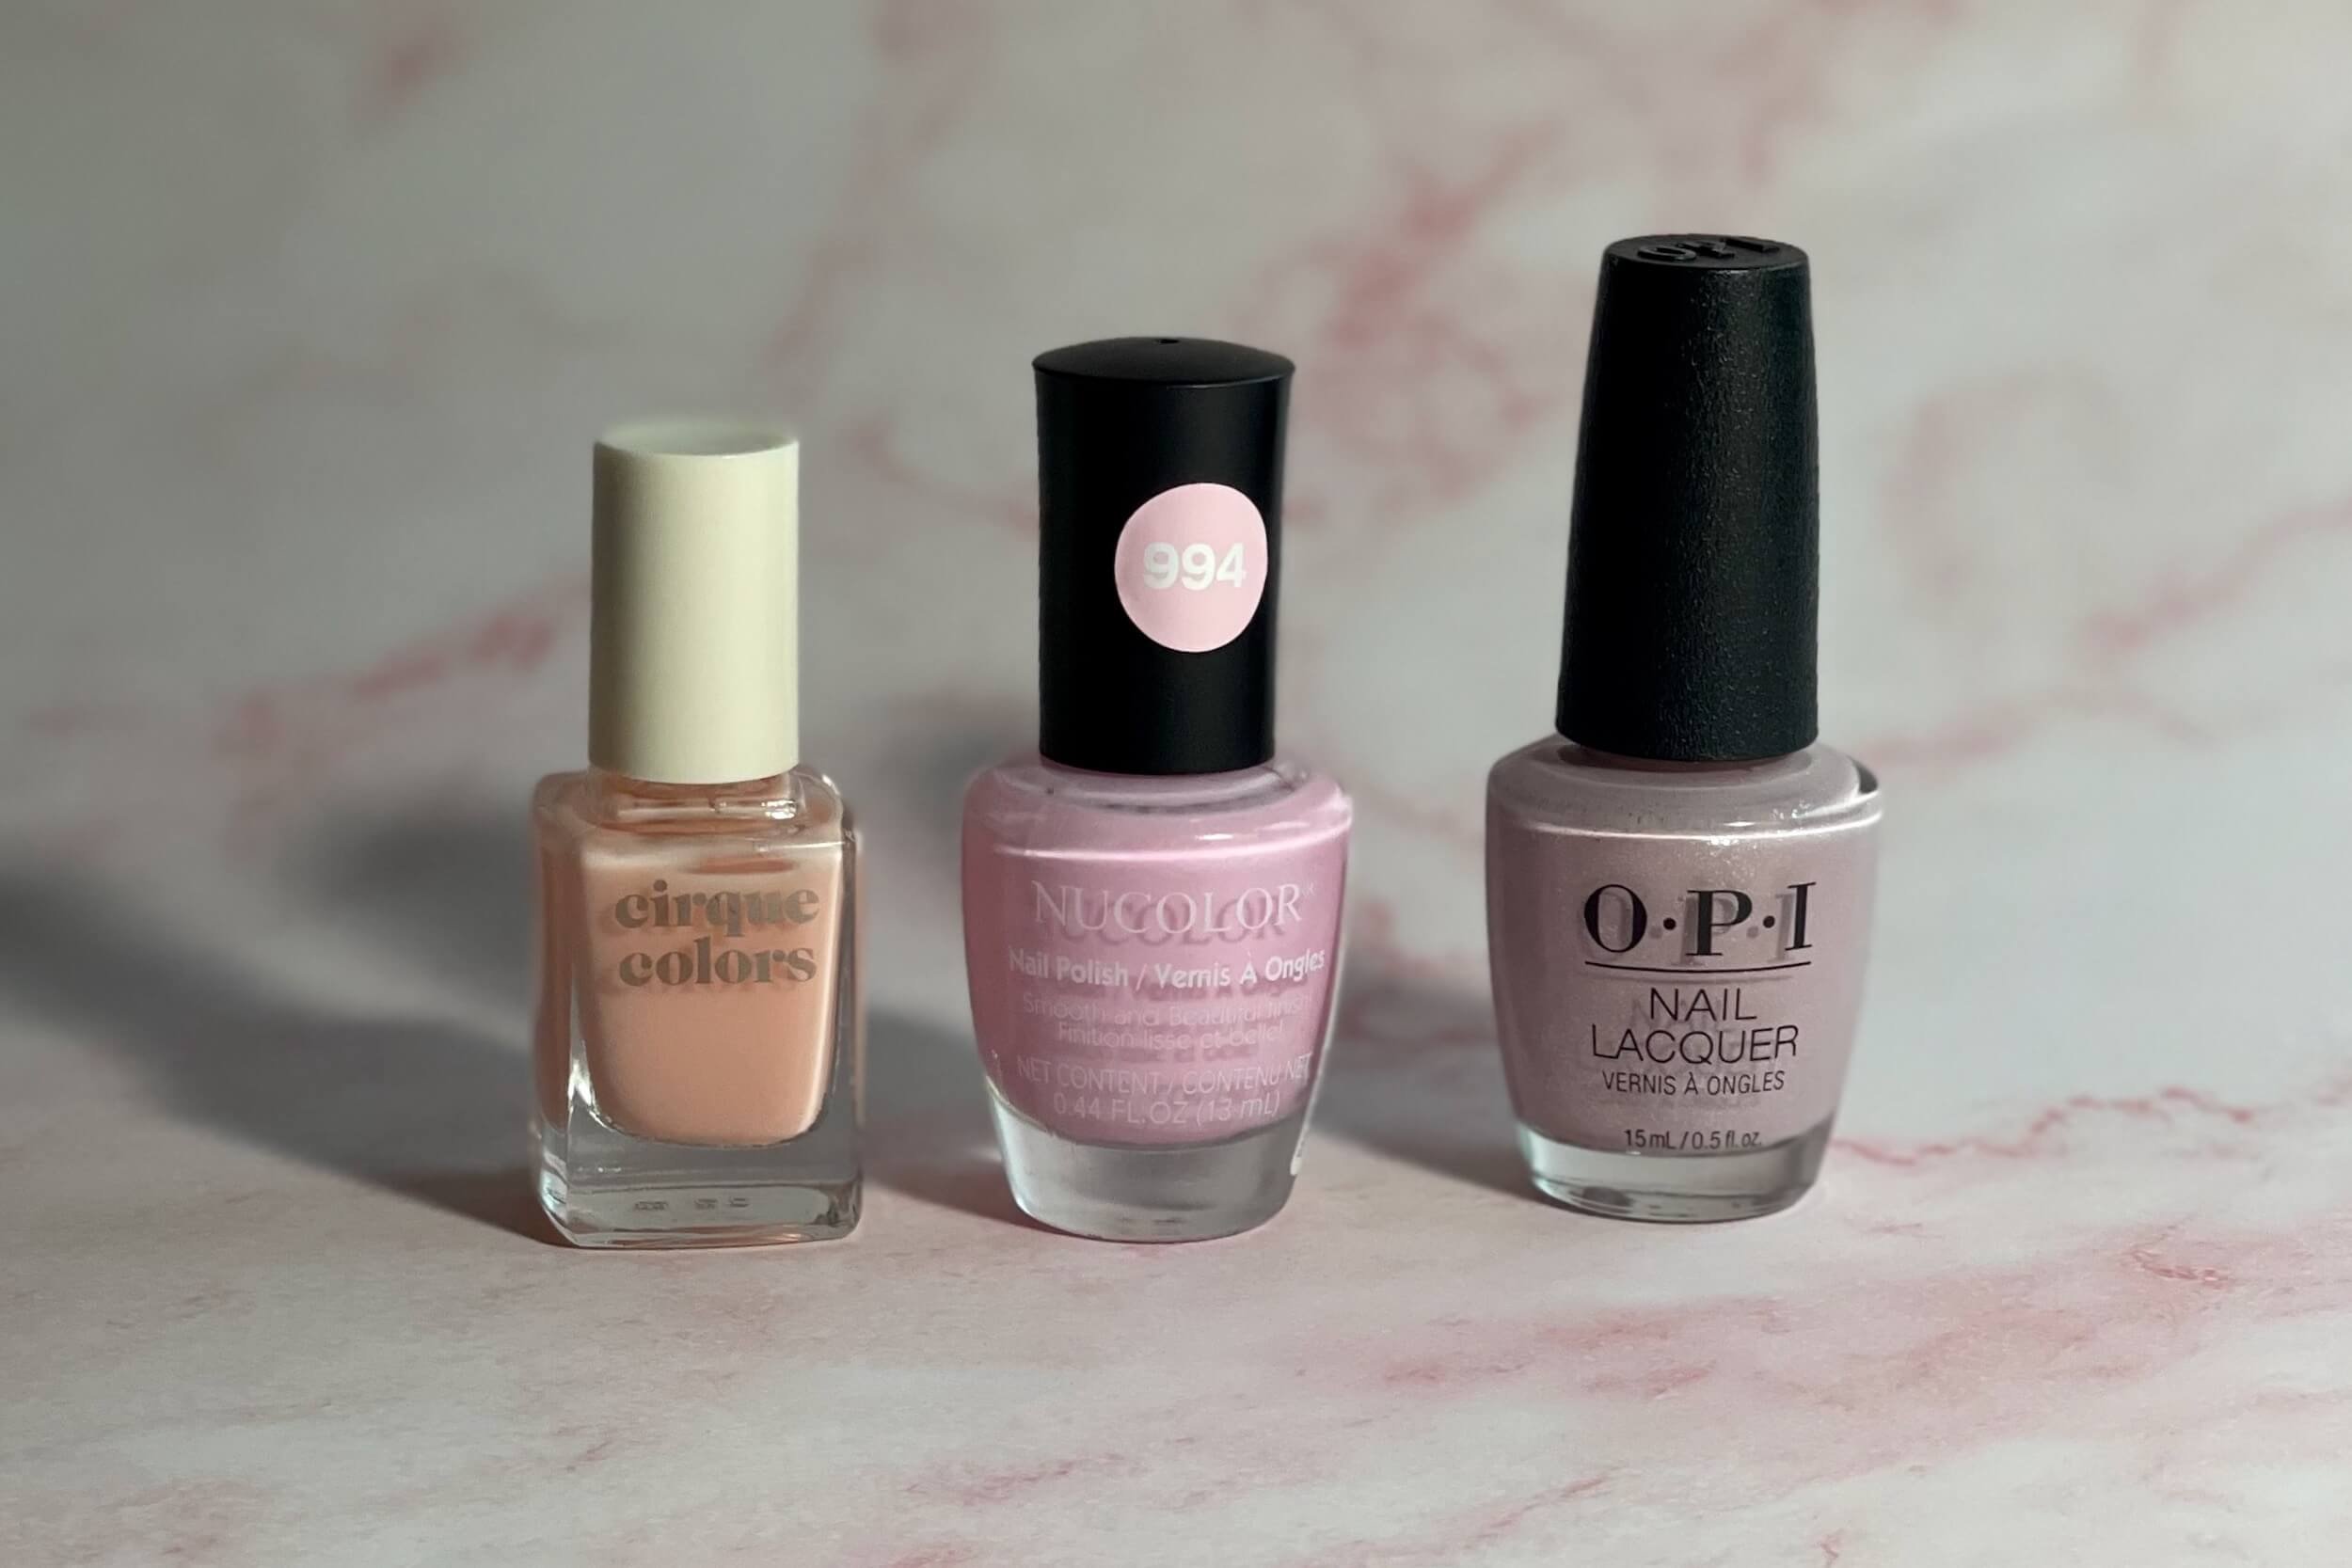 10 Light Pink Nail Designs: New Chic looks | by Nailkicks | Medium